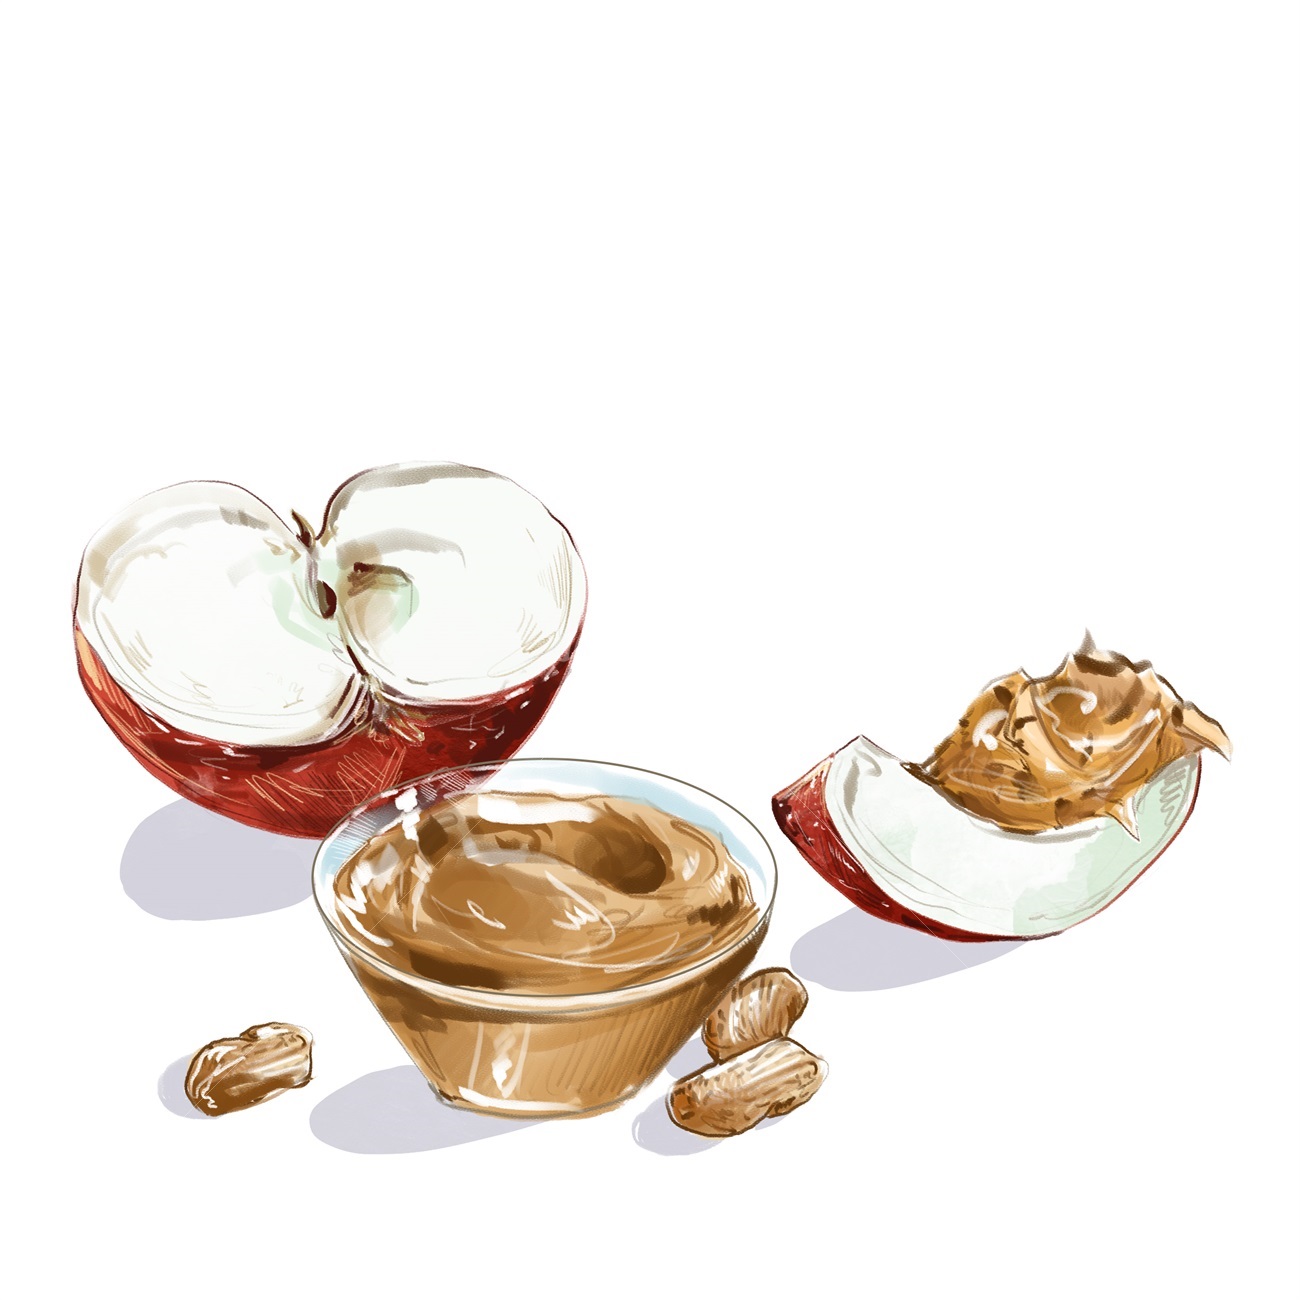 apple and peanut butter.jpg